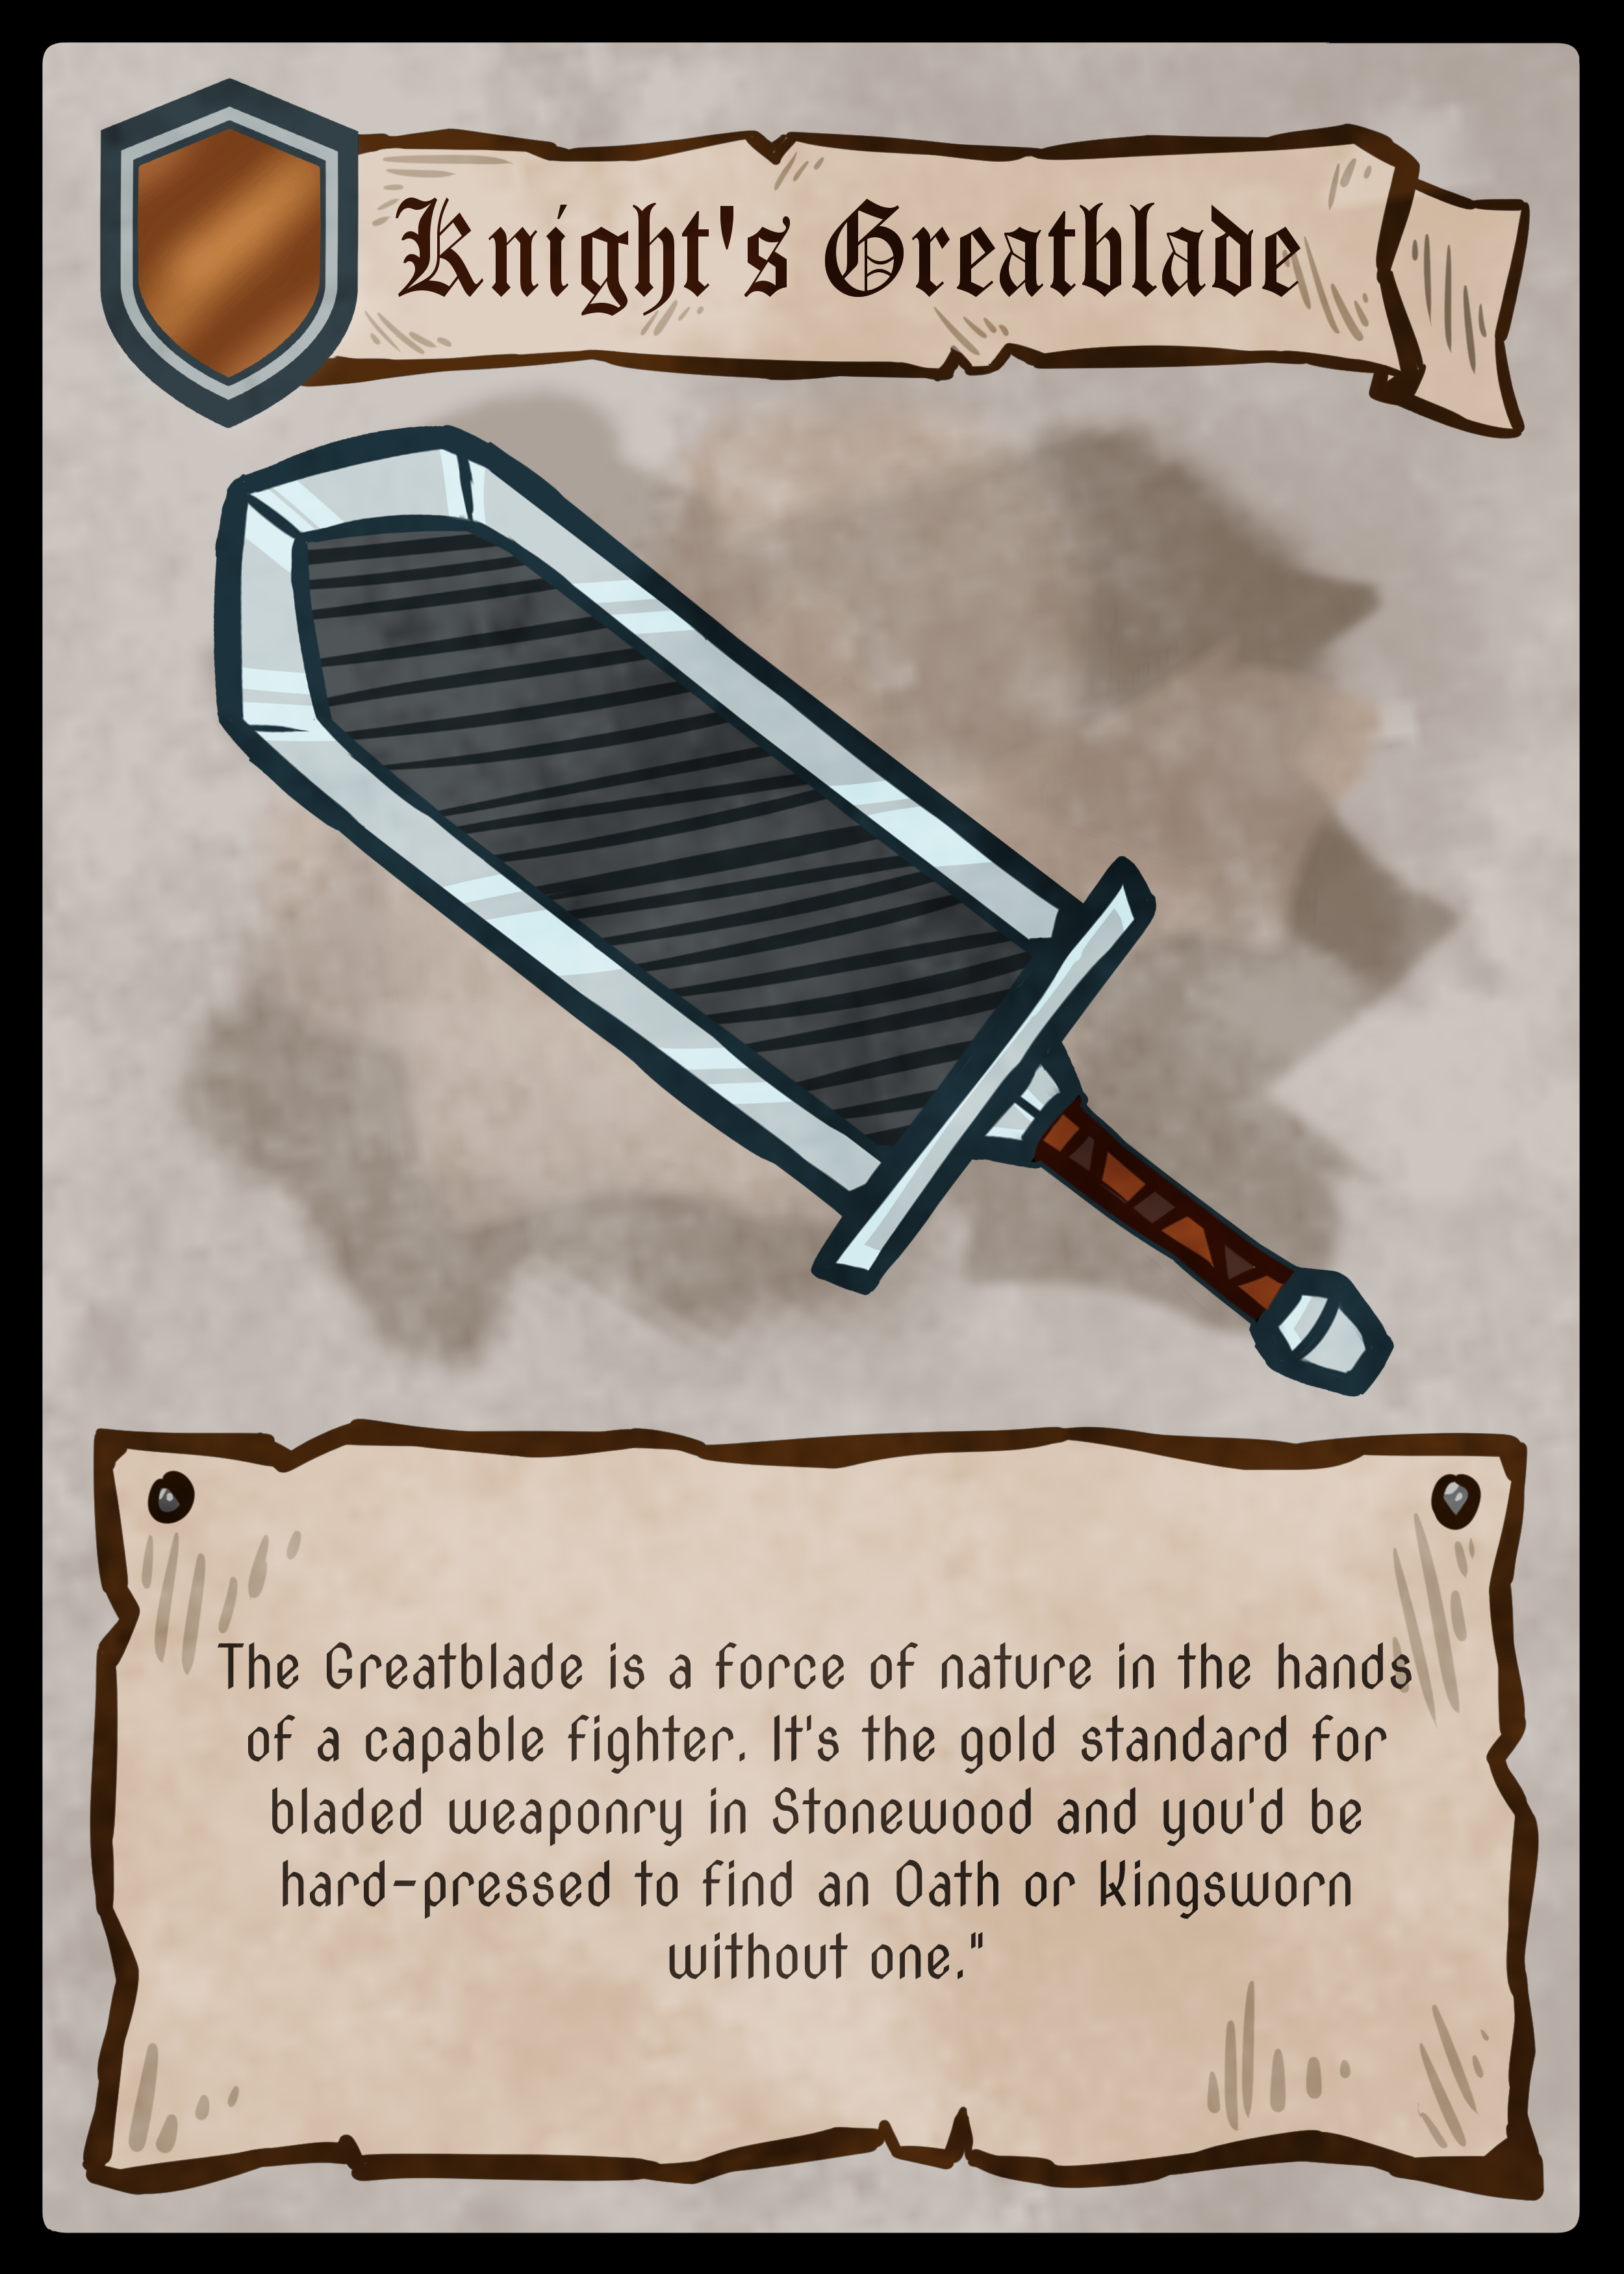 Knight's Greatblade